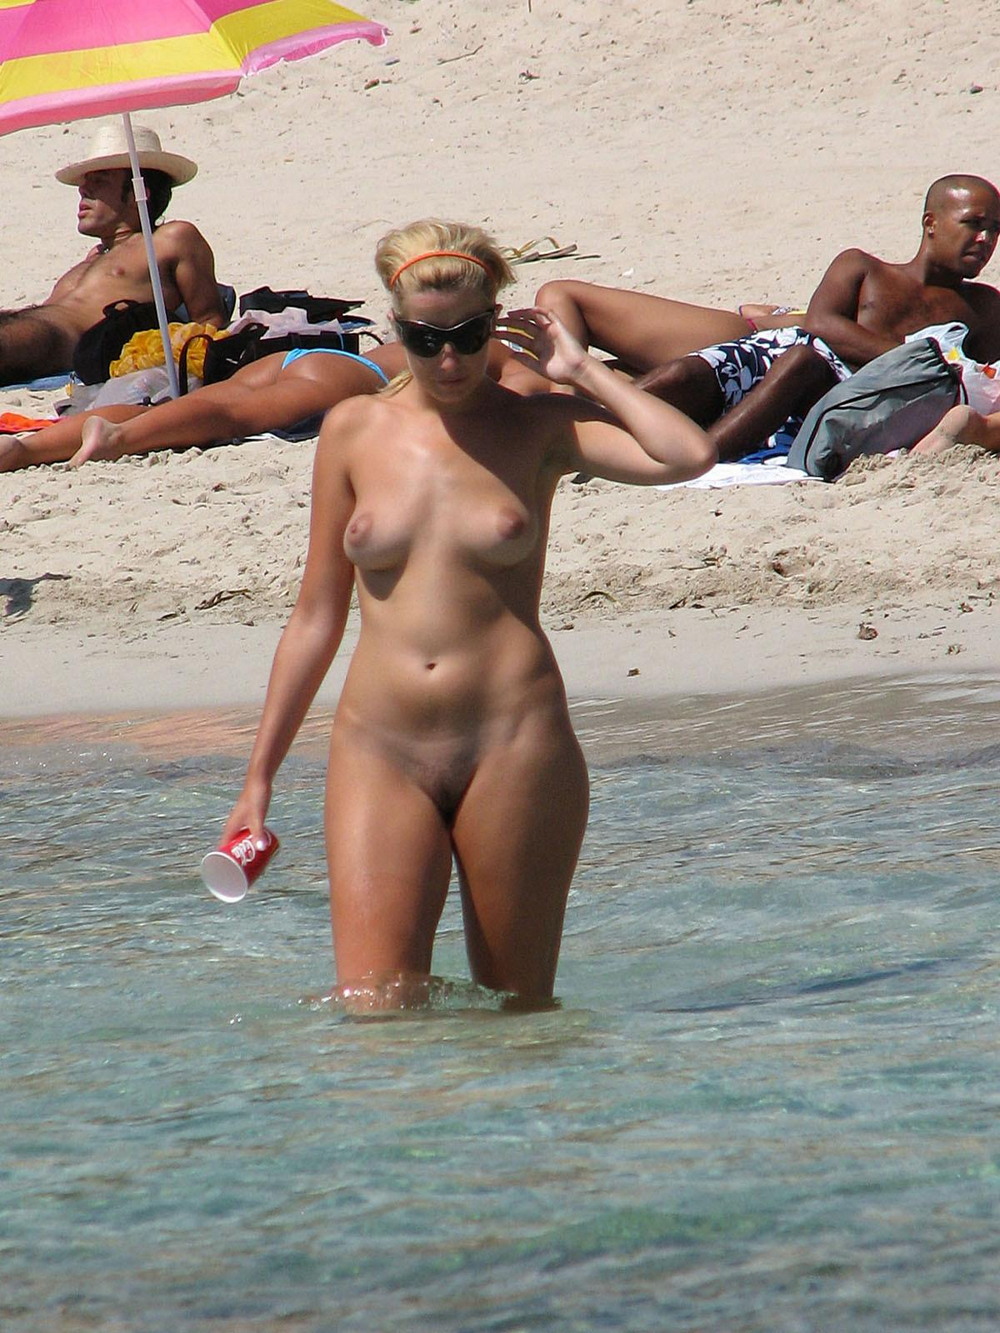 Cape cod nudist beach